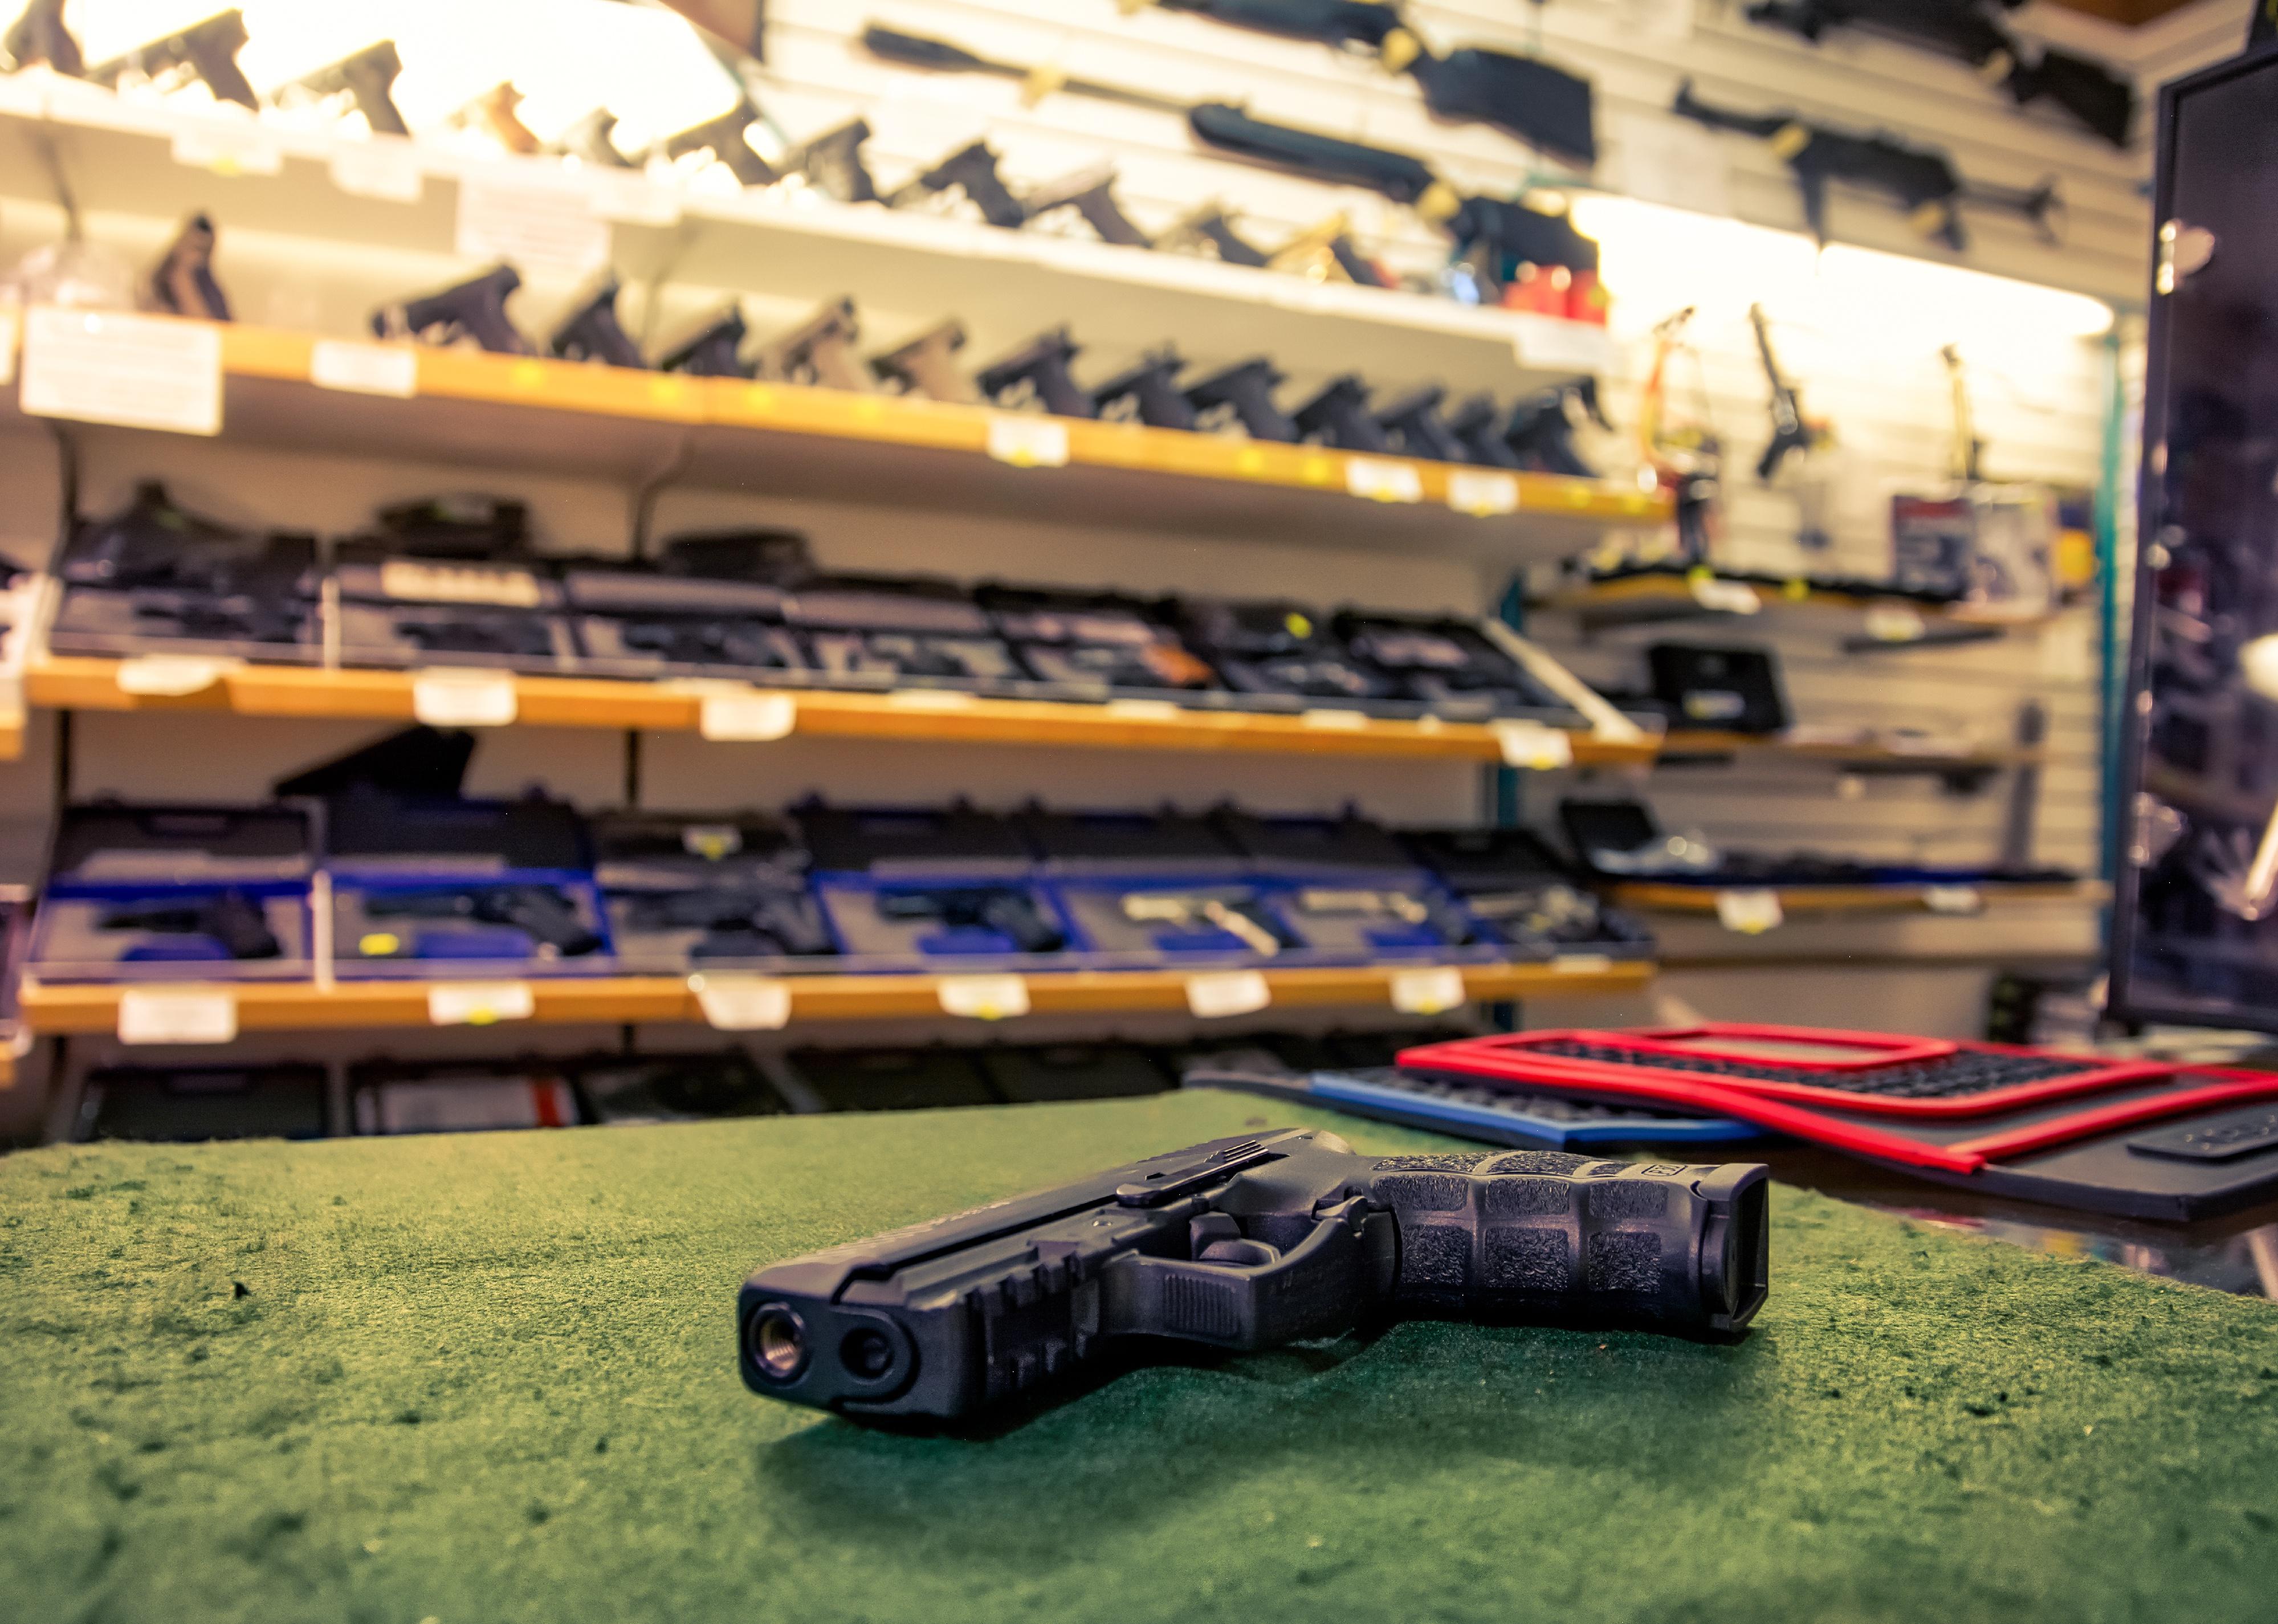 Black pistol gun on store countertop.